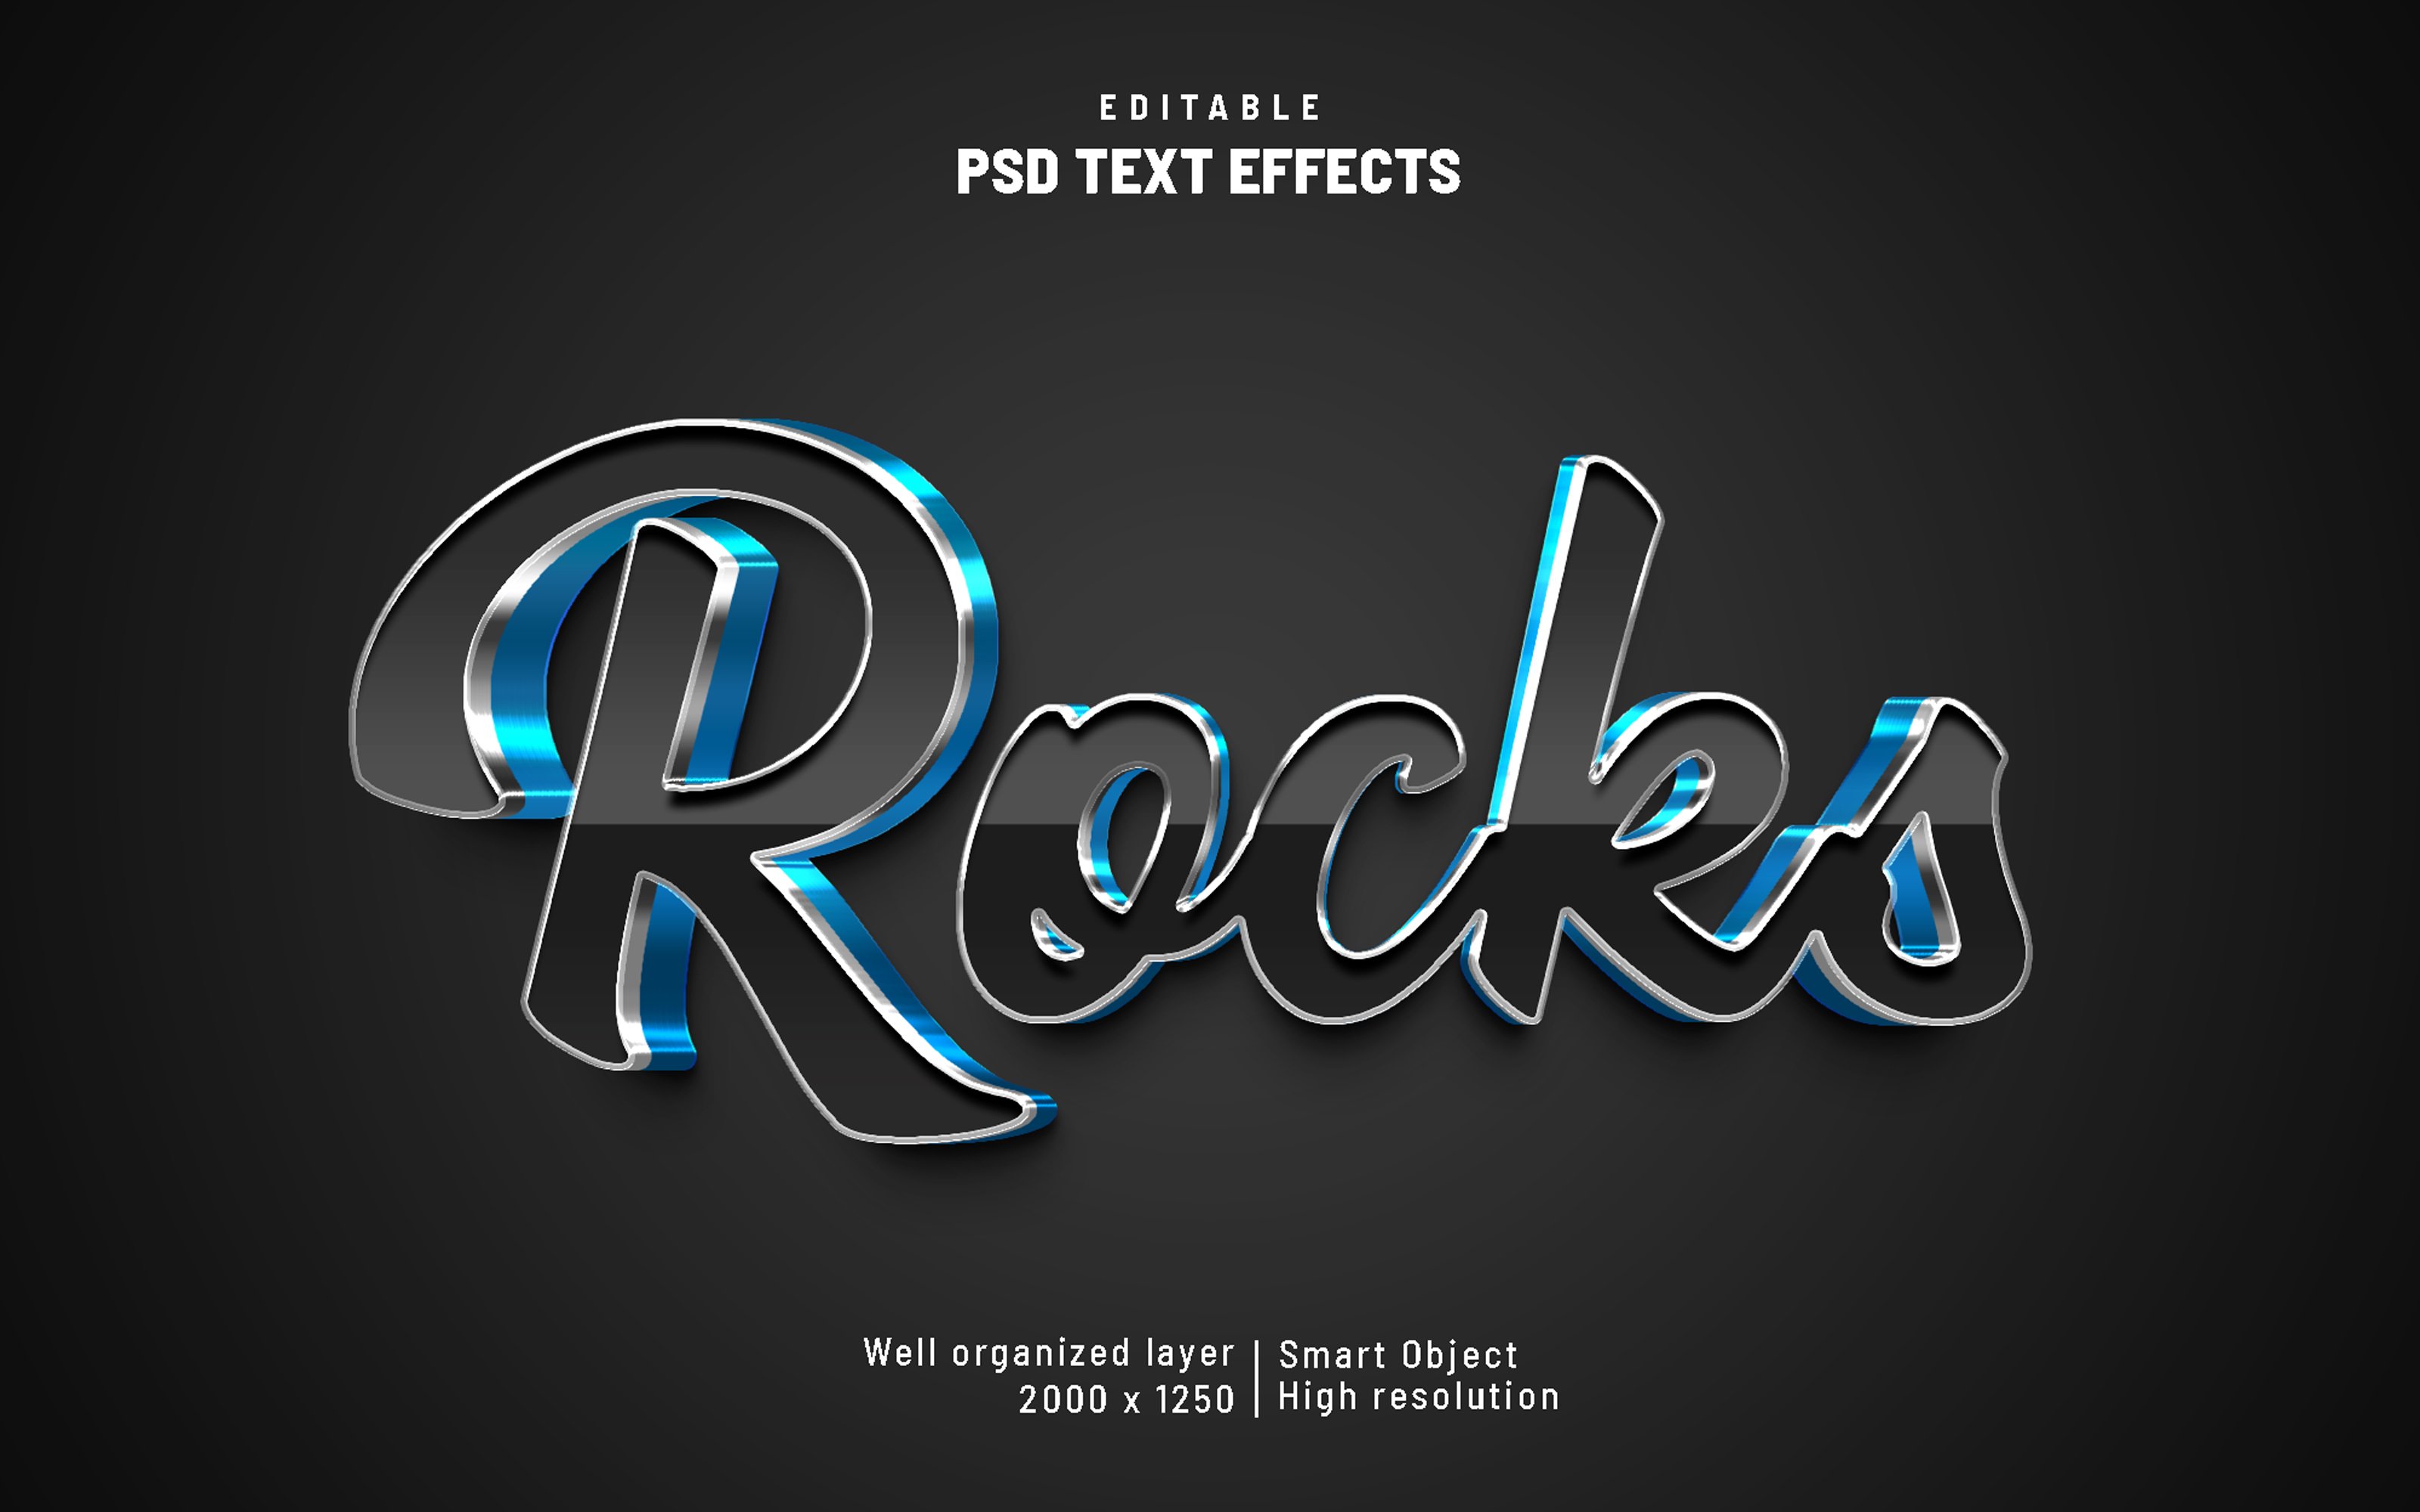 Rocks Black blue editable text PSDcover image.